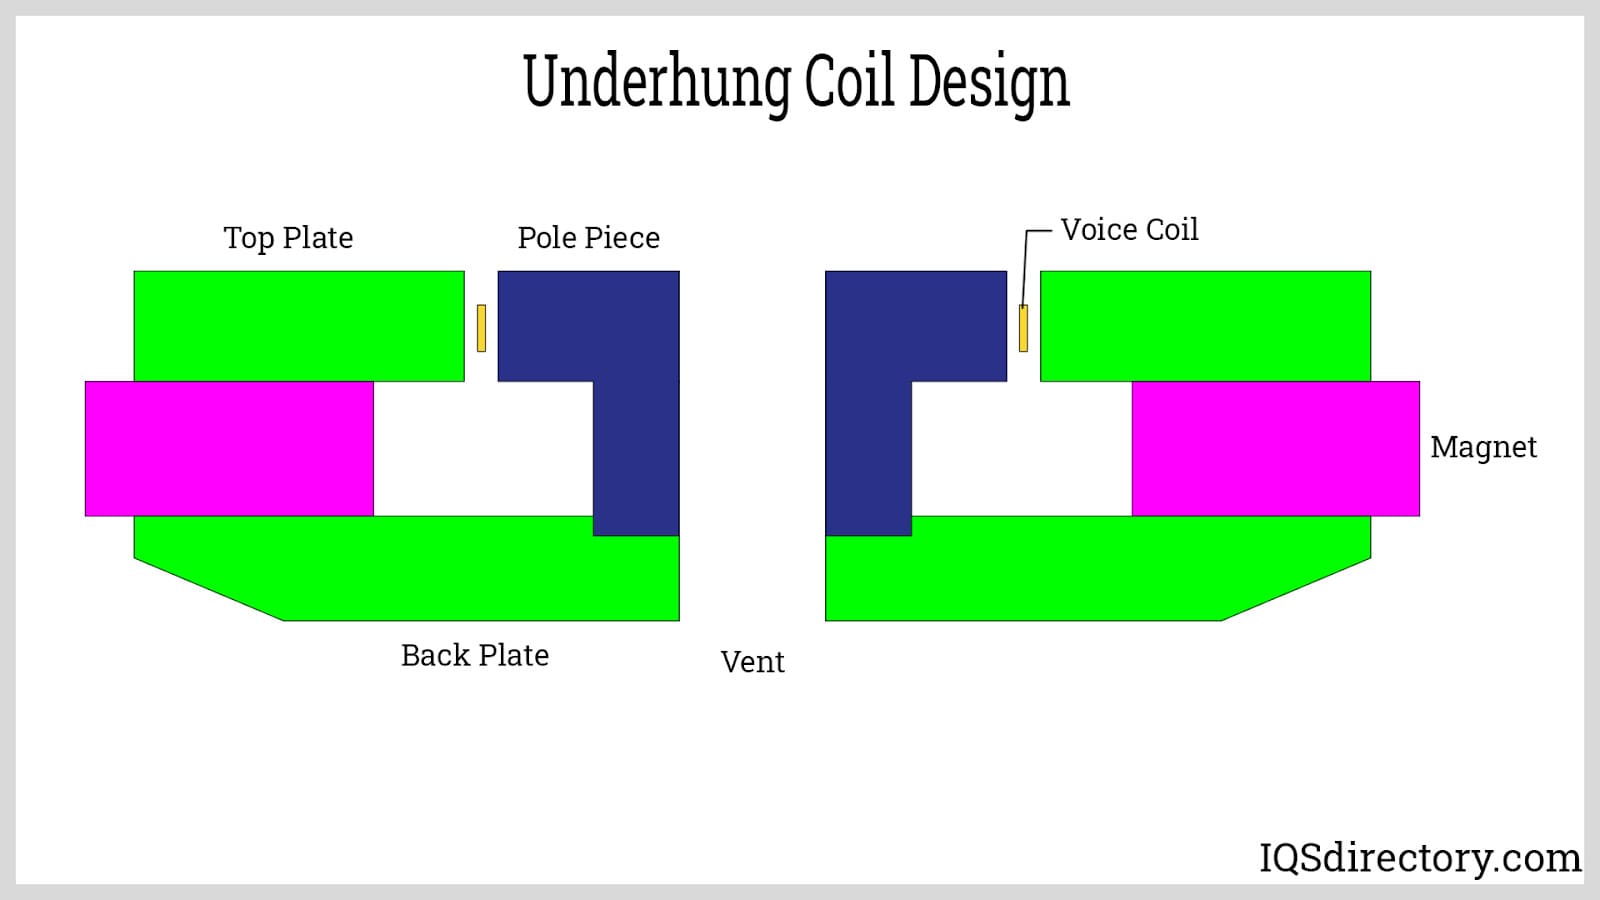 Underhung Coil Design